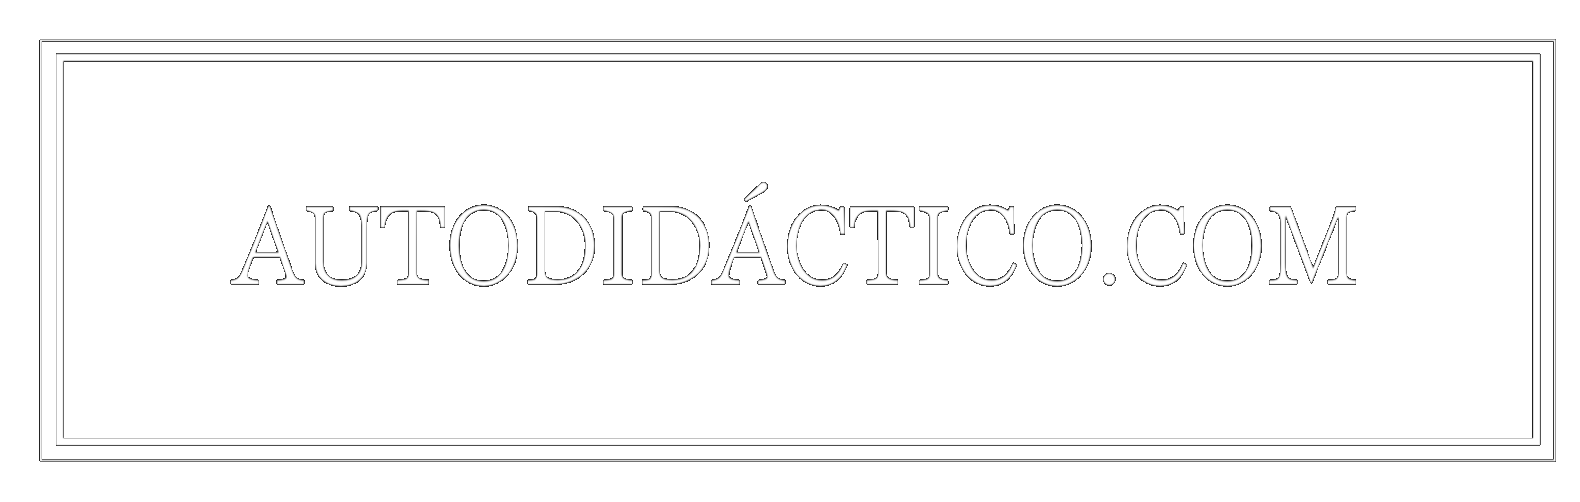 Autodidactico.com